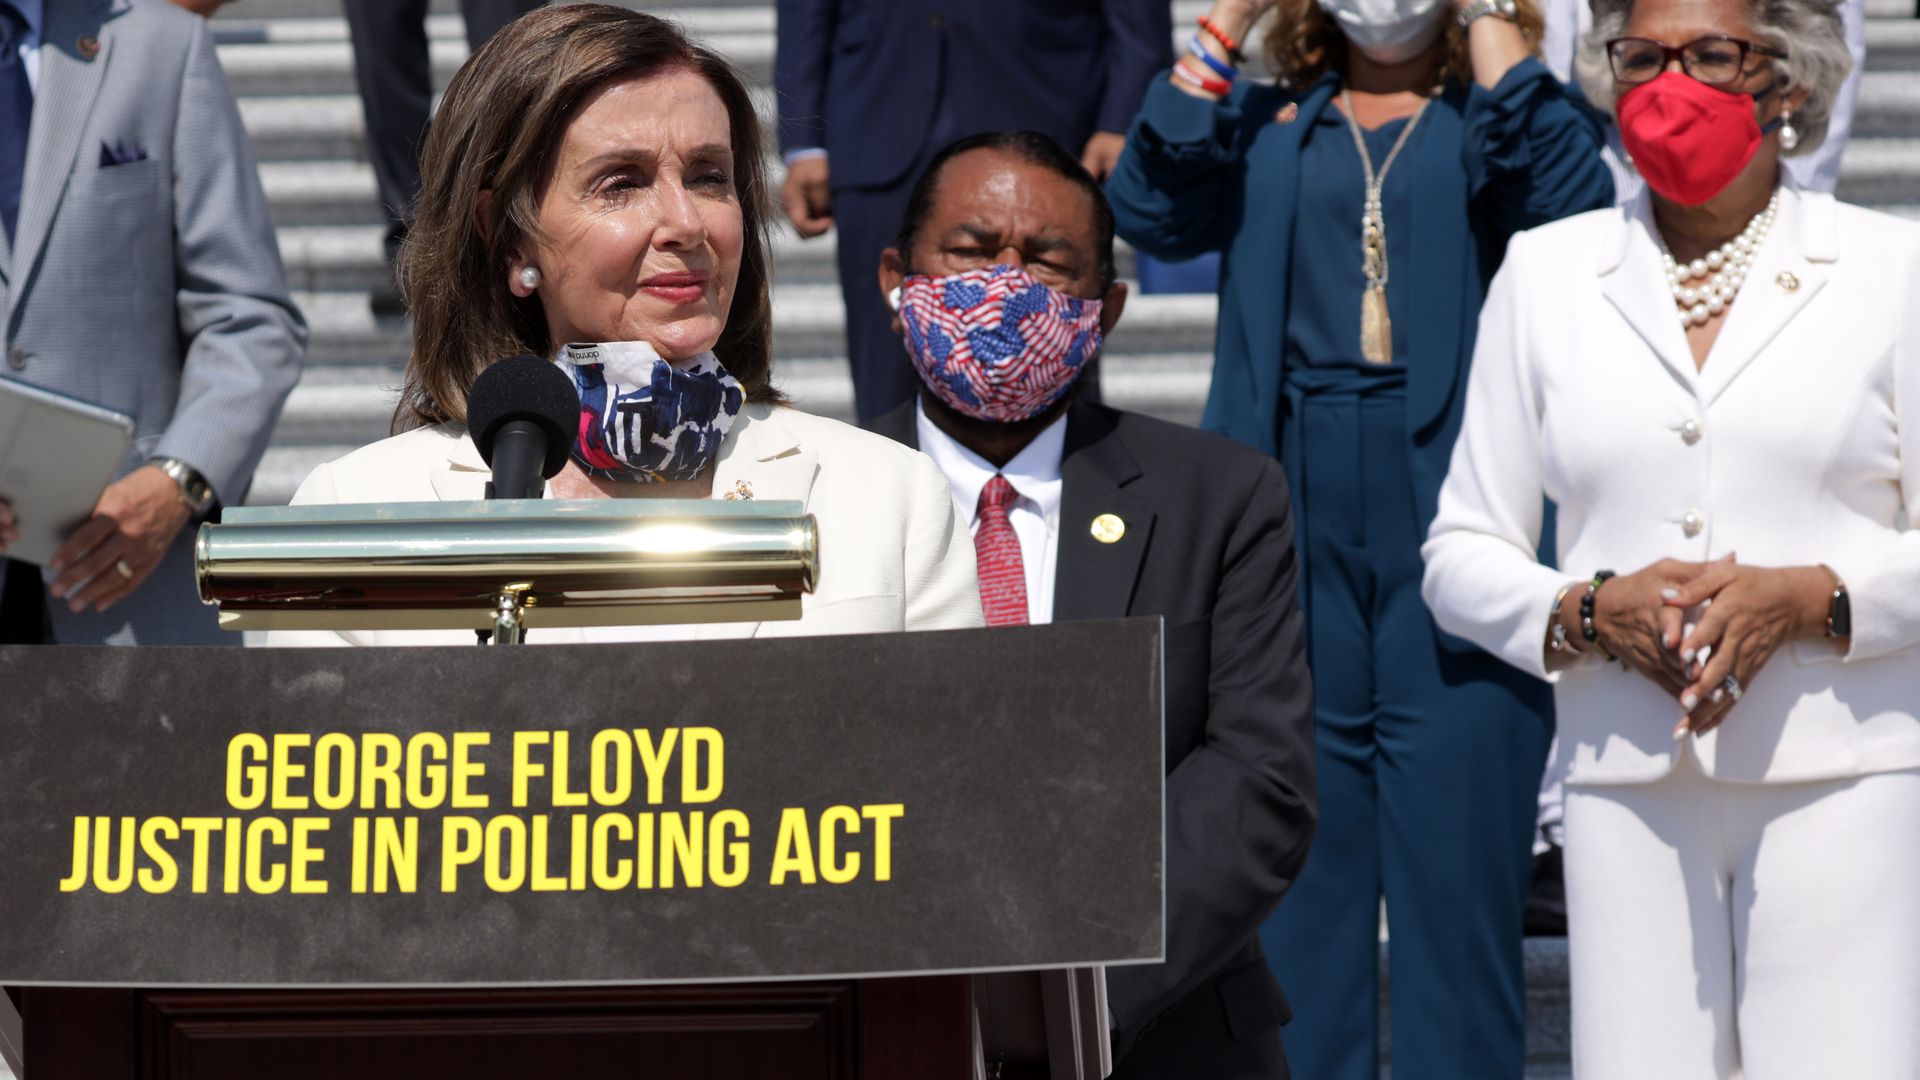 Nancy Pelosi speaking in June 2020 on a police reform bill named after George Floyd.